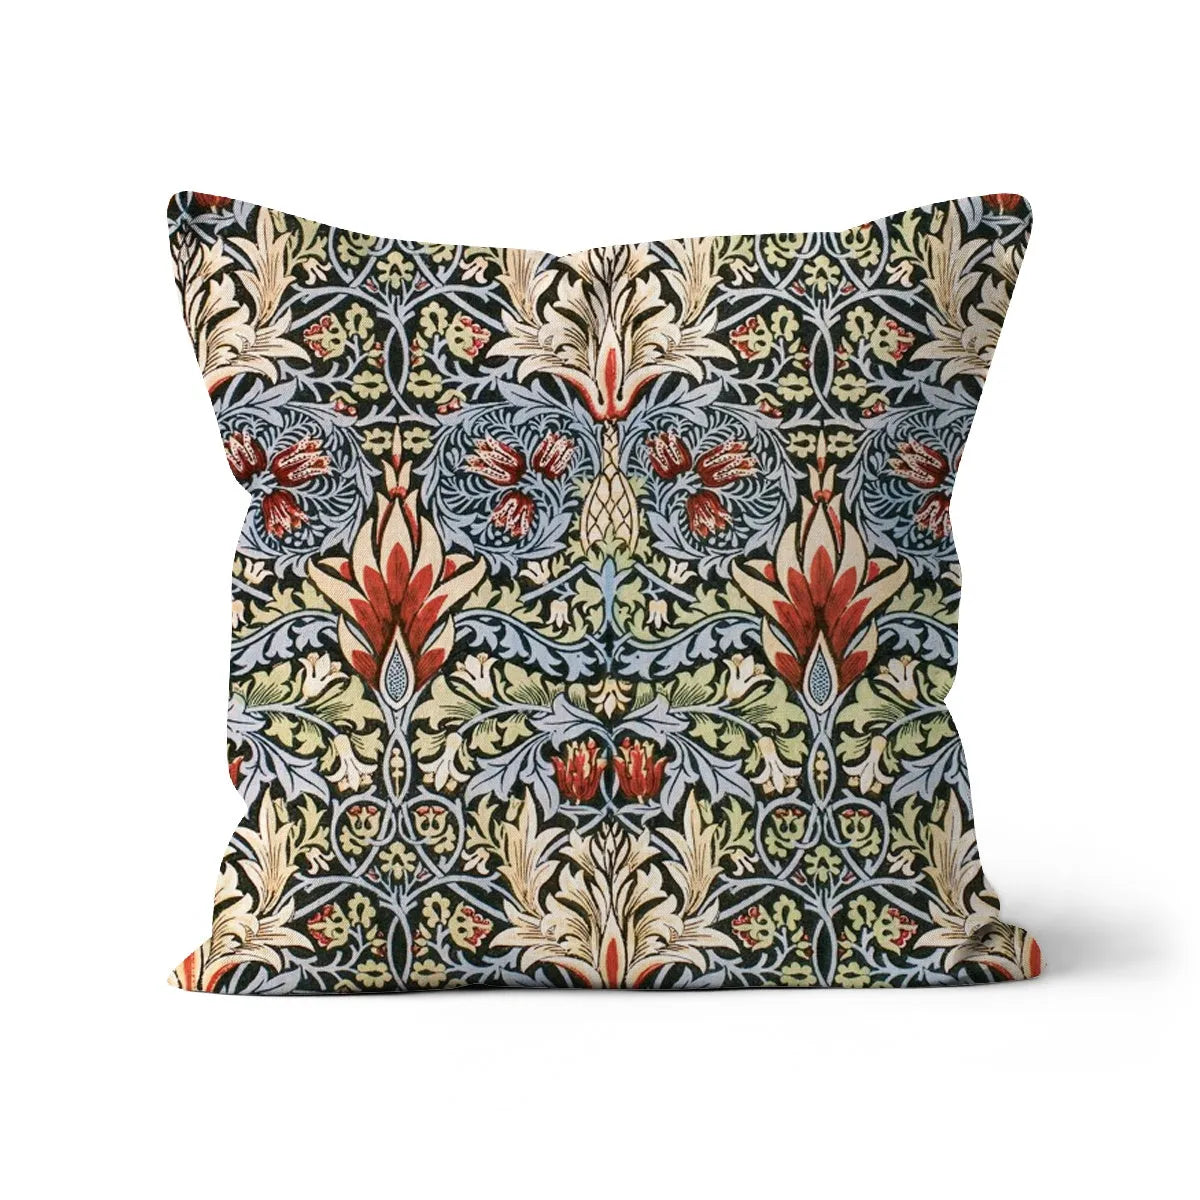 Snakeshead - William Morris Cushion - Decorative Throw Pillow - Canvas / 16x16 -